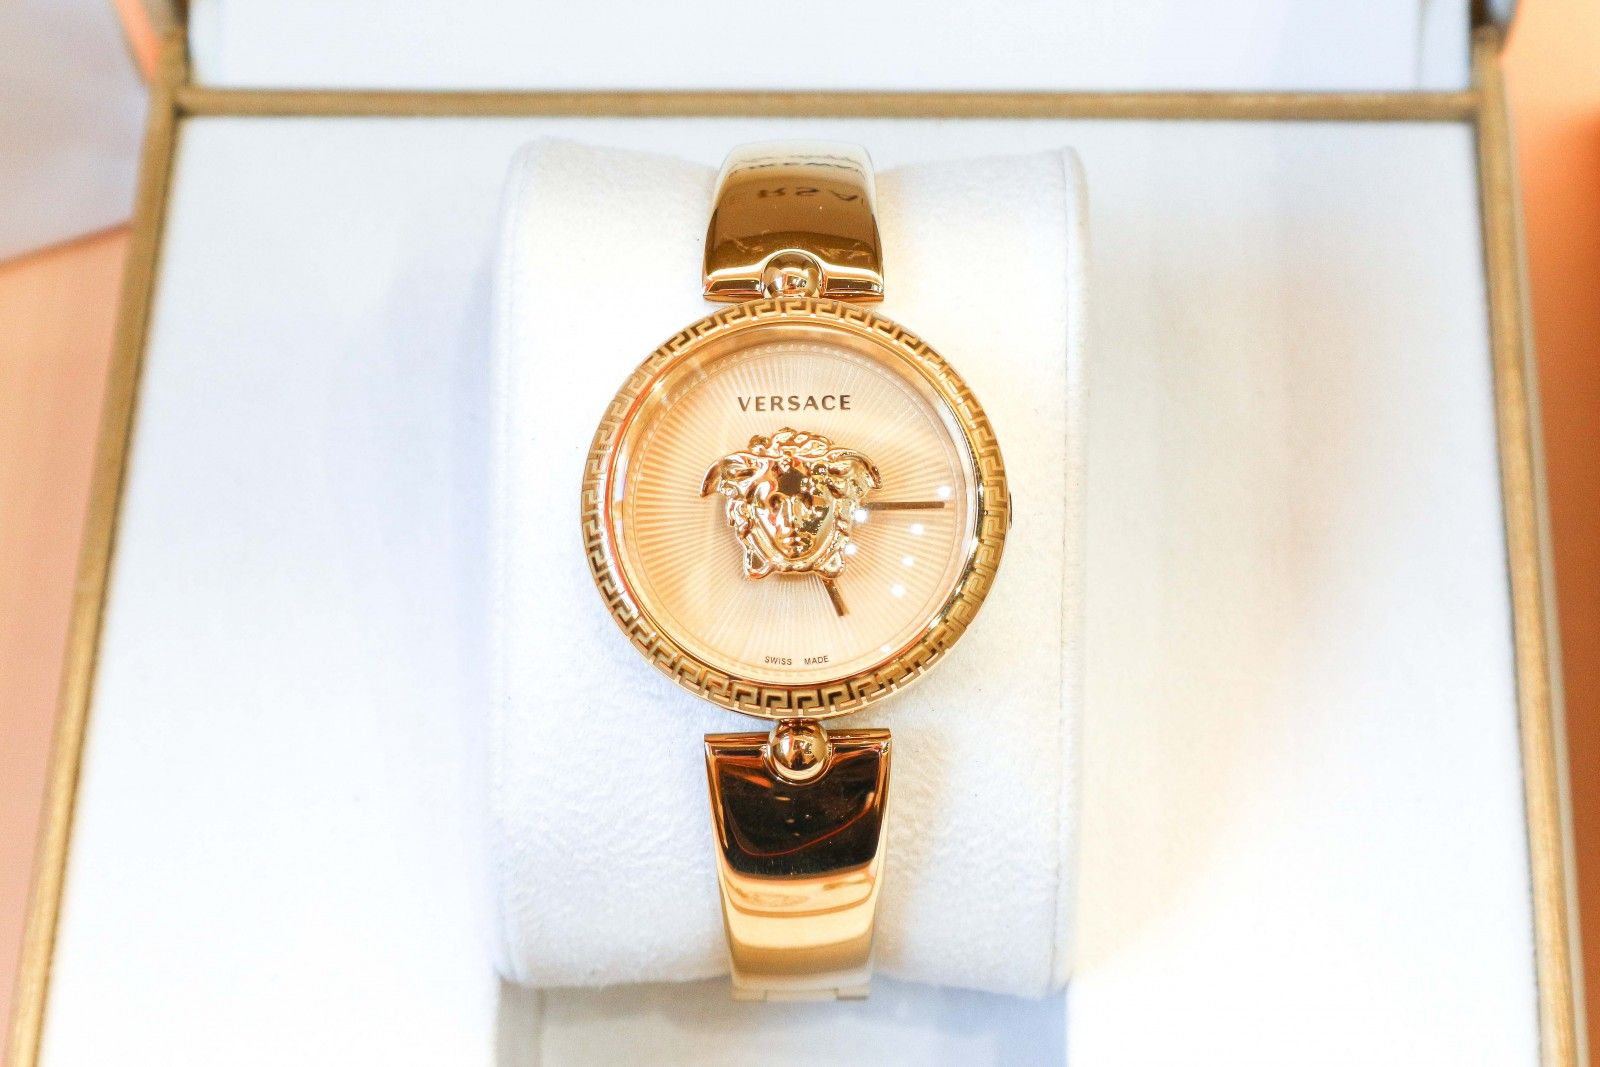 Đồng hồ Versace Palazzo Empire Watch, 34mm VECQ00618 likewatch.com